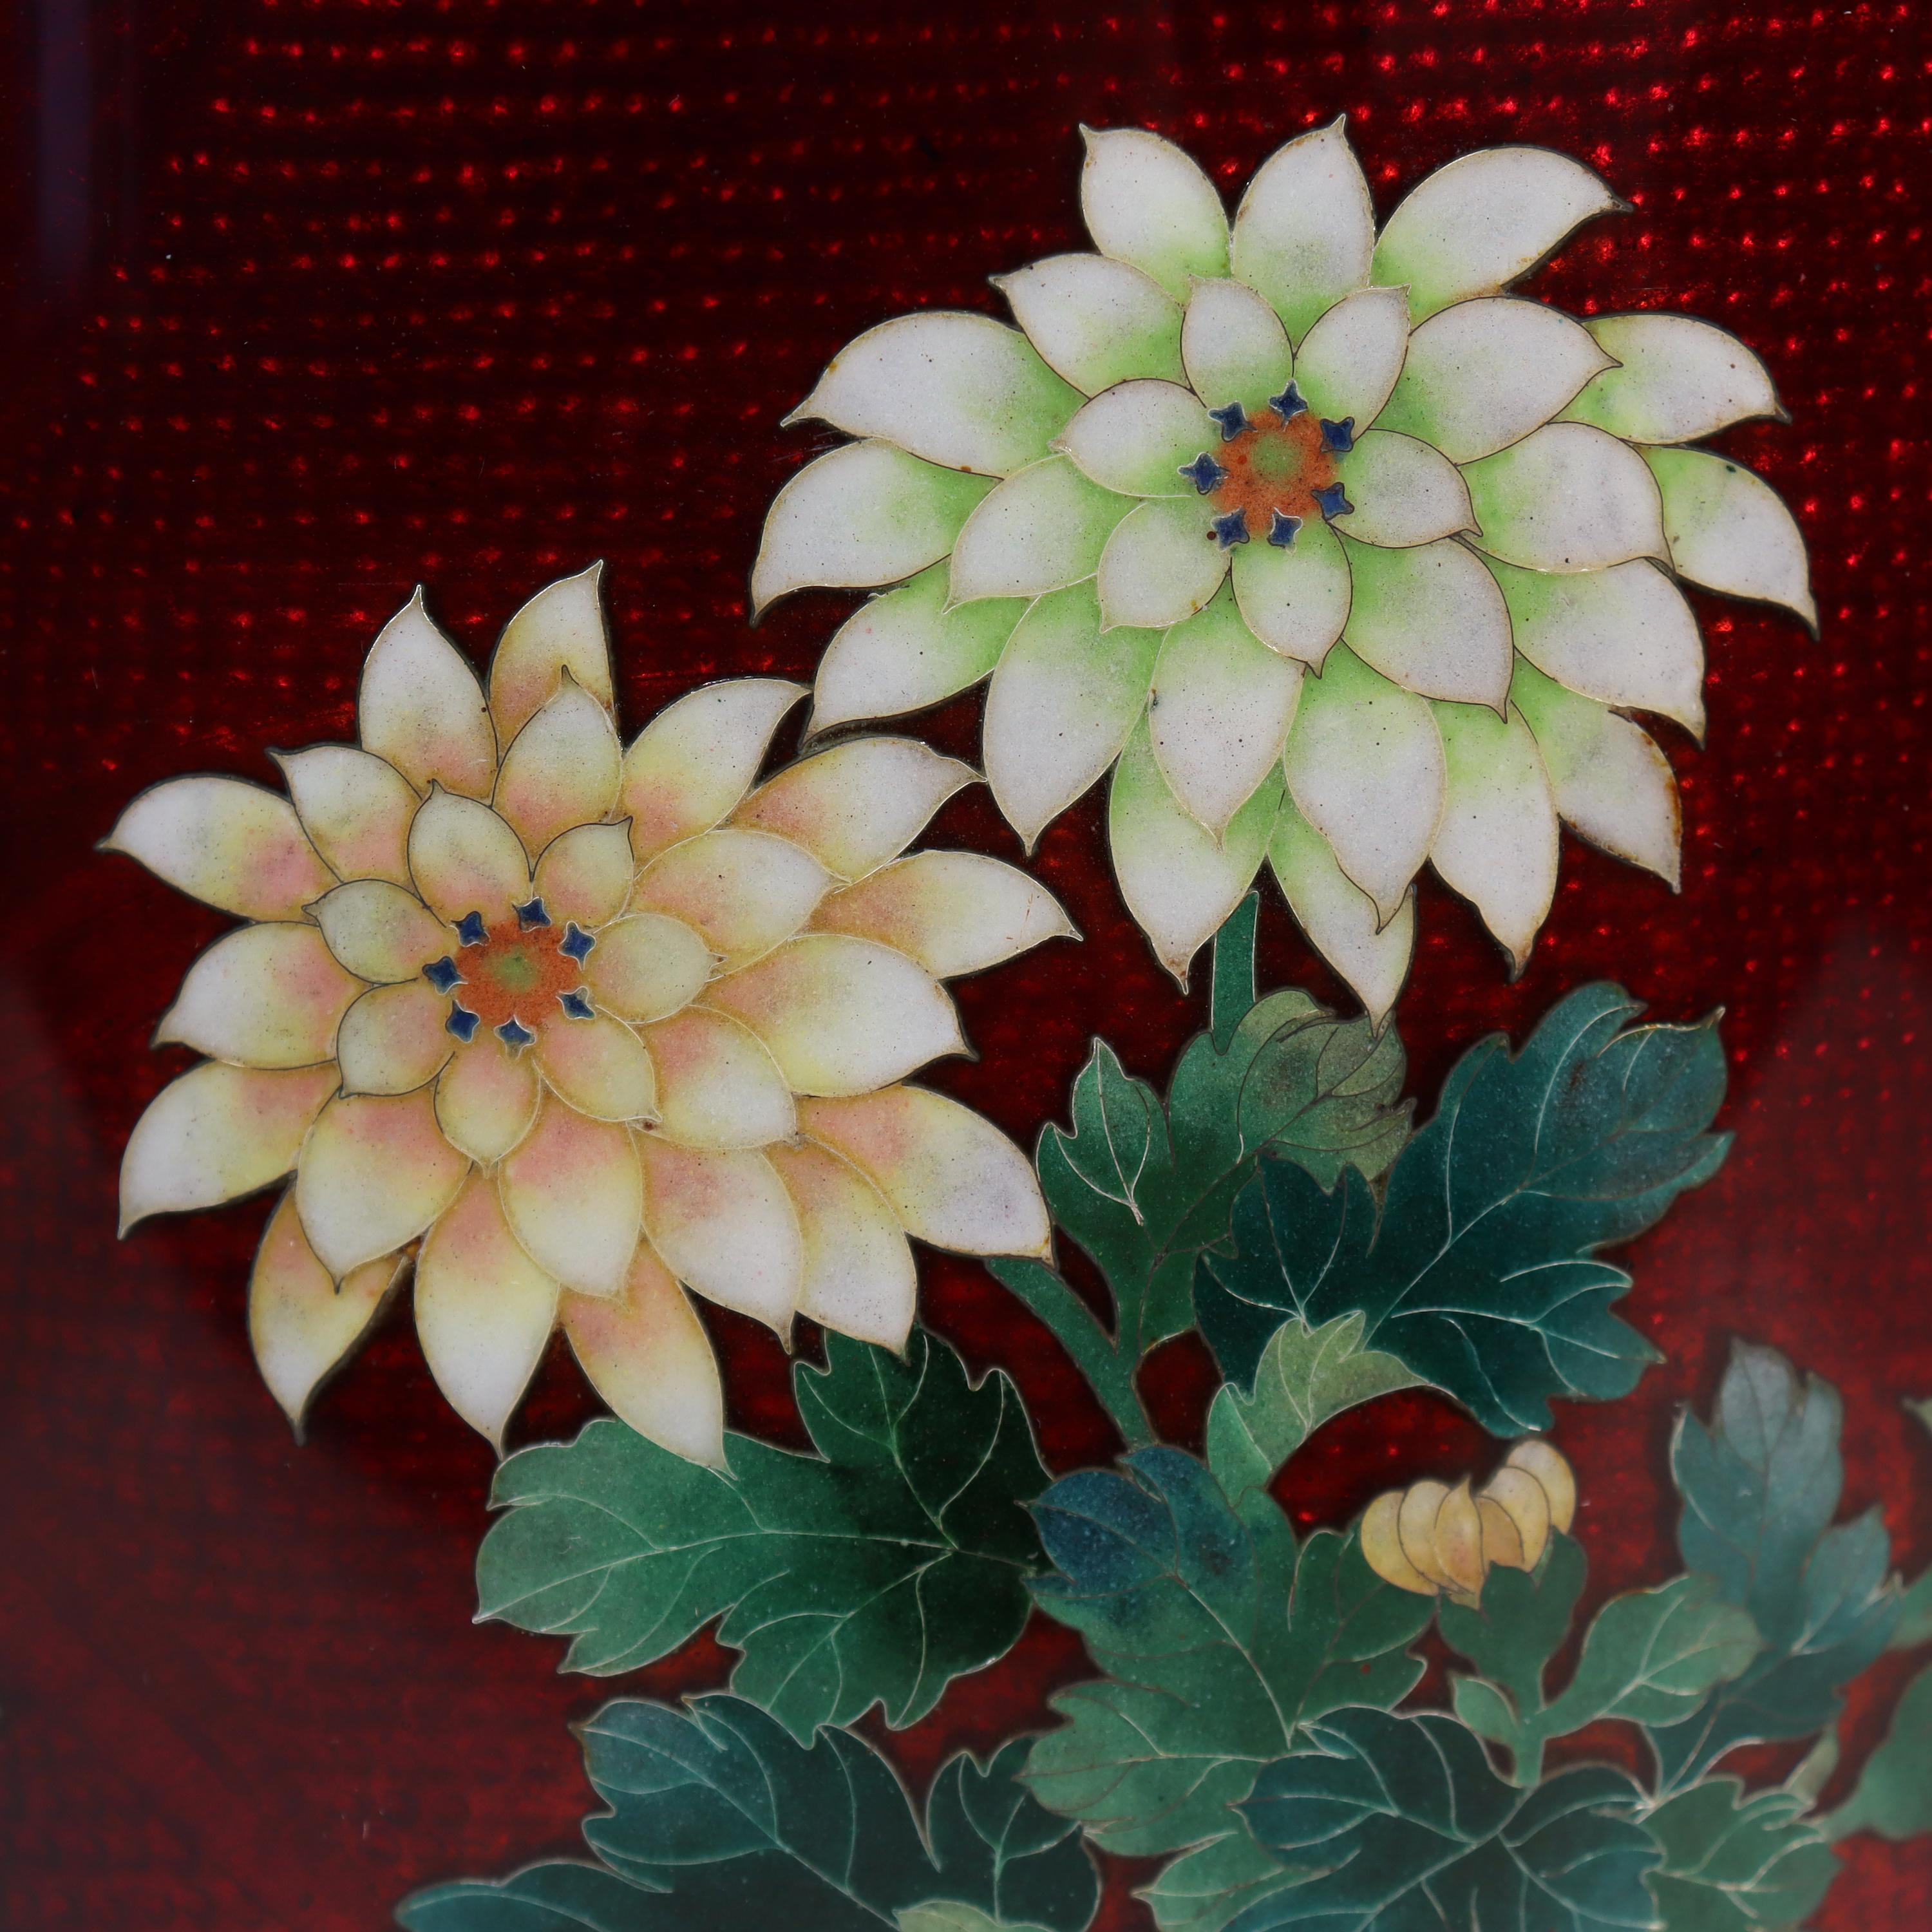 Old or Antique Japanese Cloisonne Enamel Ginbari Vase with Floral Decoration For Sale 1